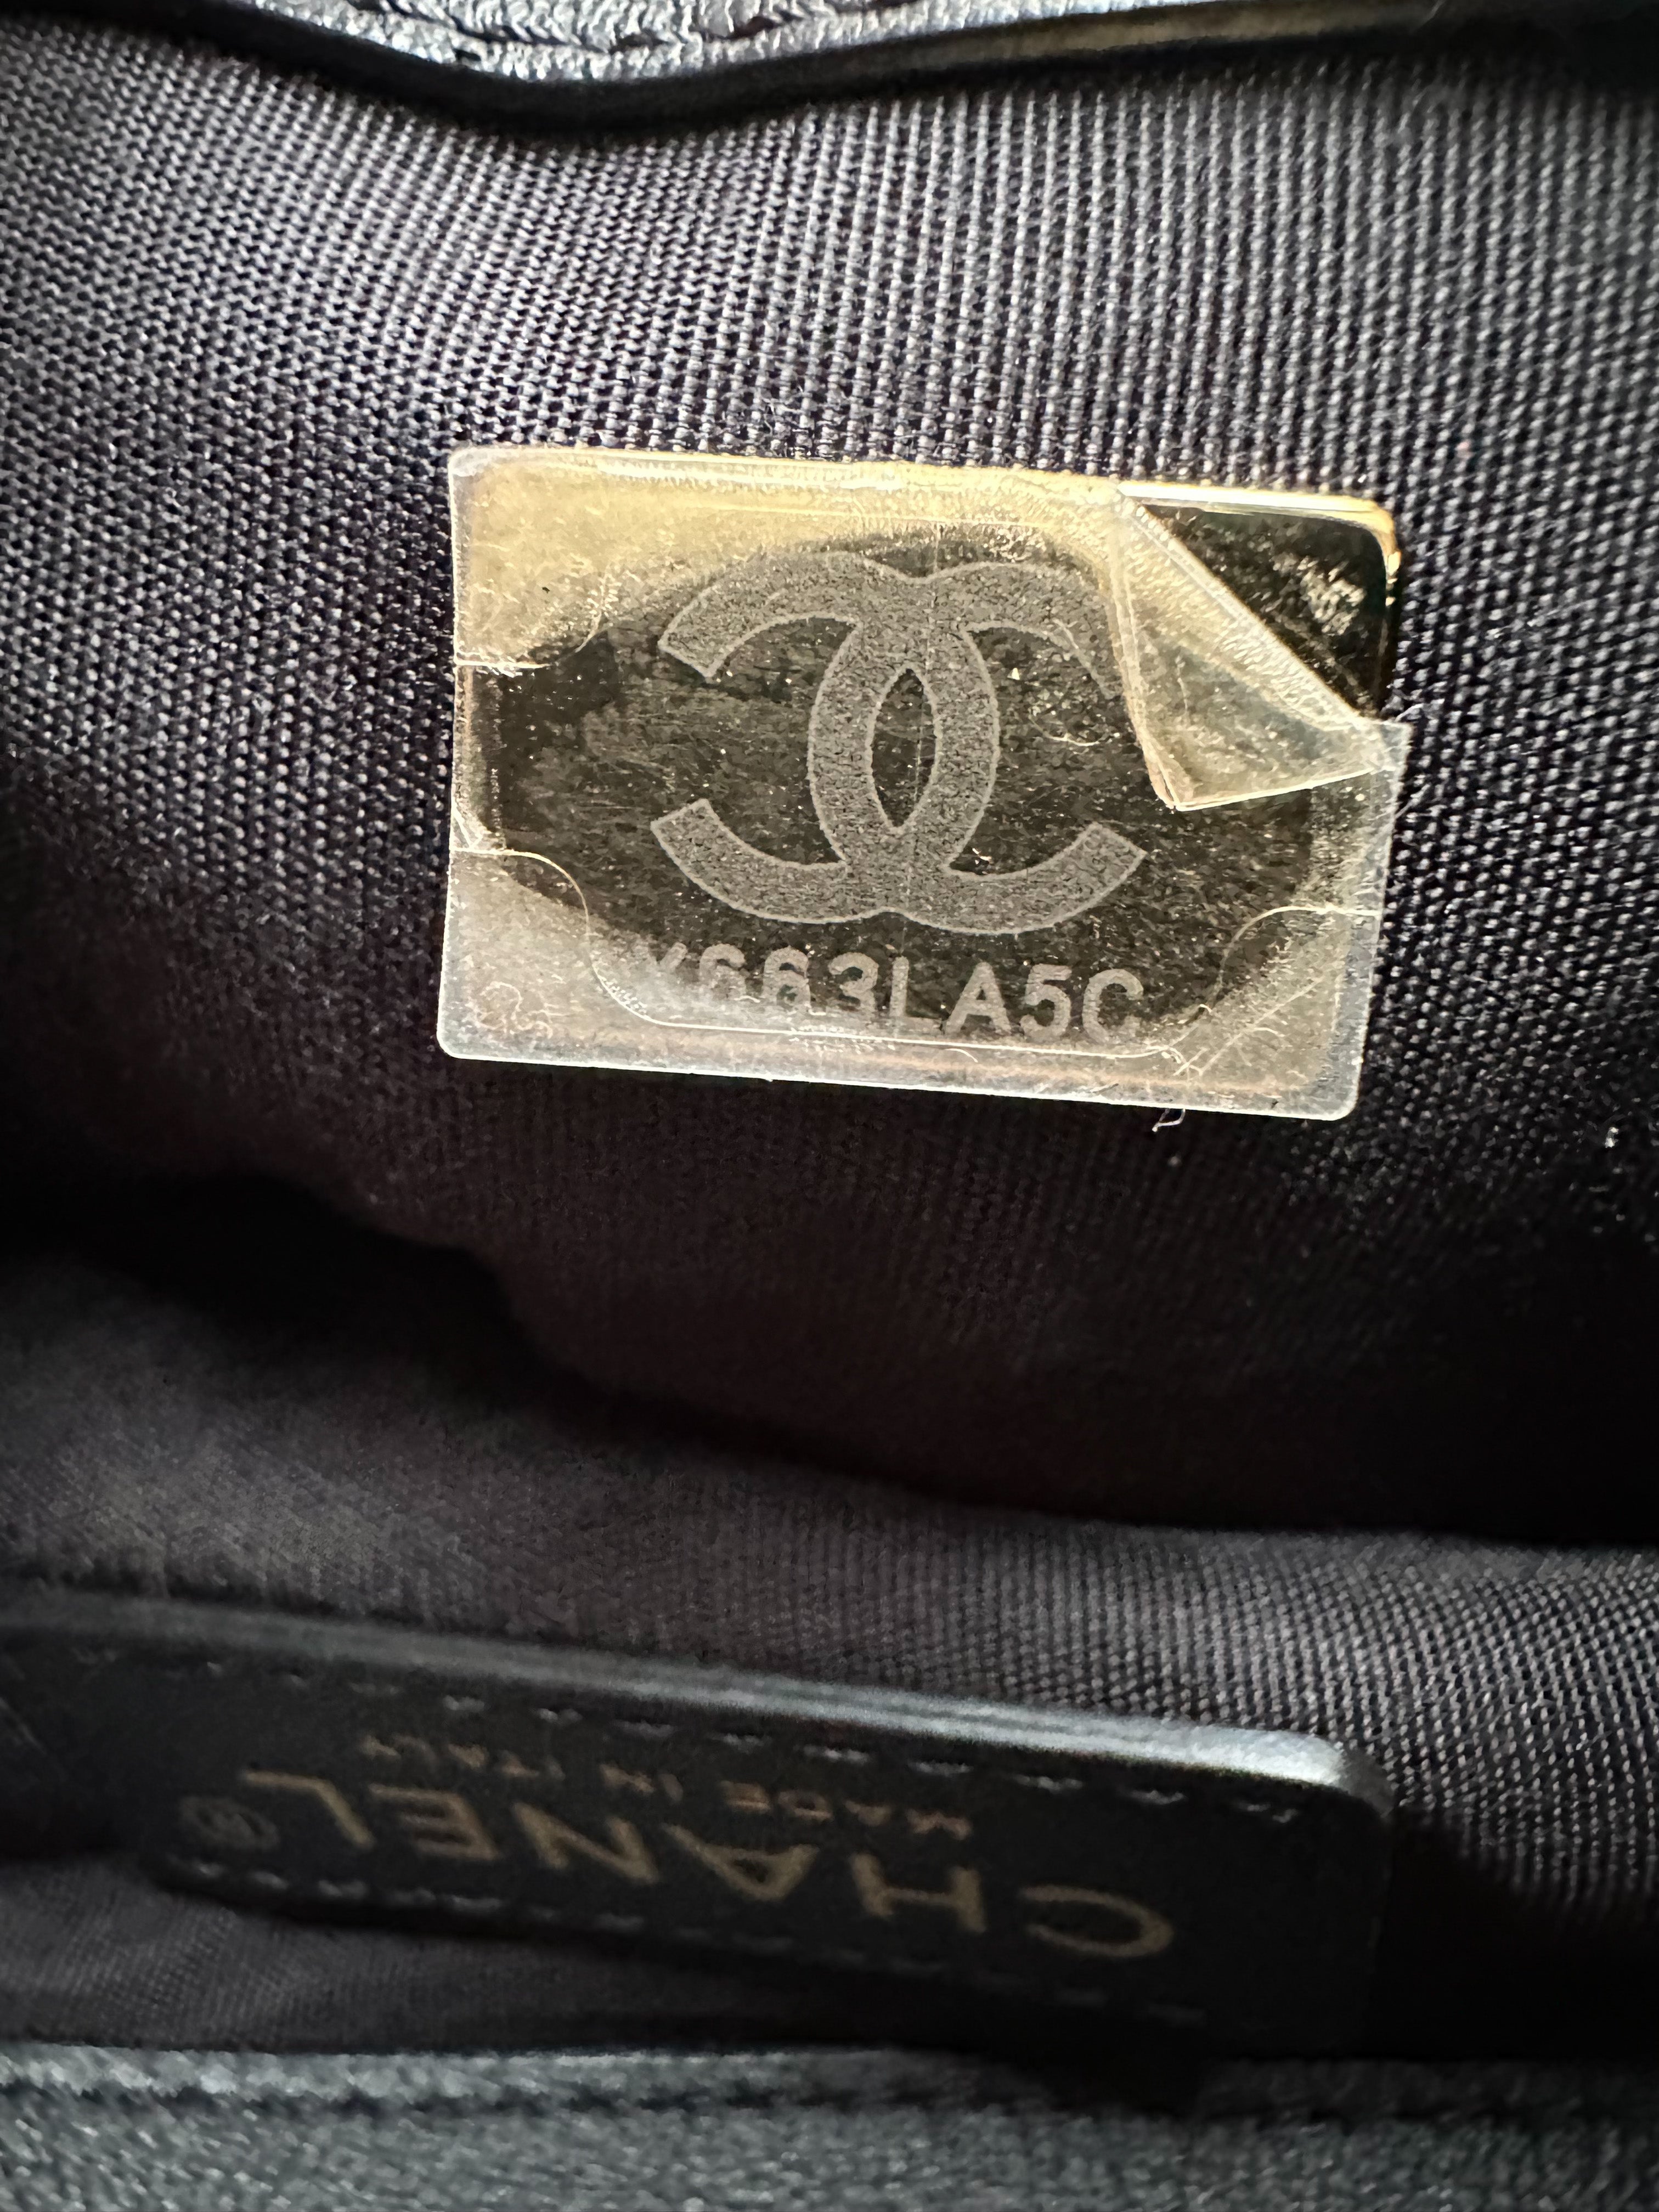 Chanel Black Flat Fringe Quilted Lambskin Bag